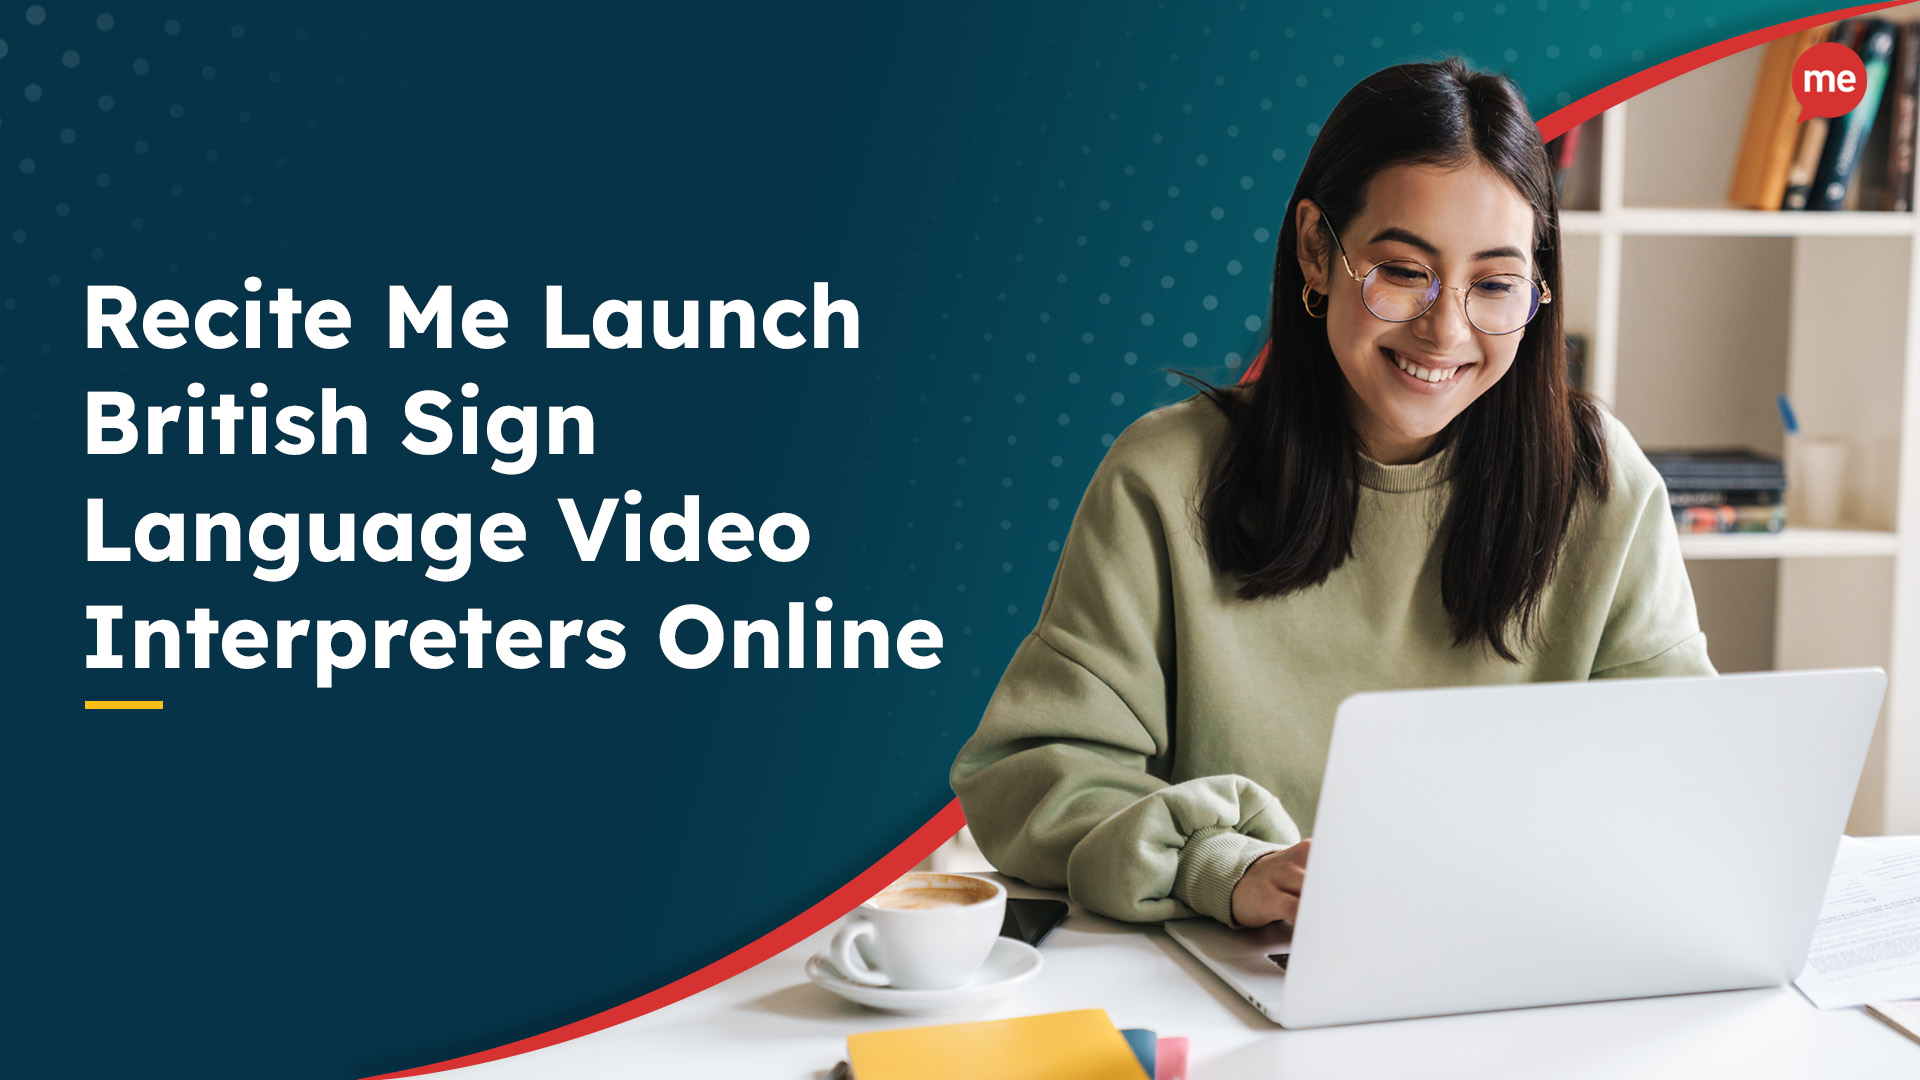 Recite Me Launch British Sign Language Video Interpreters Online